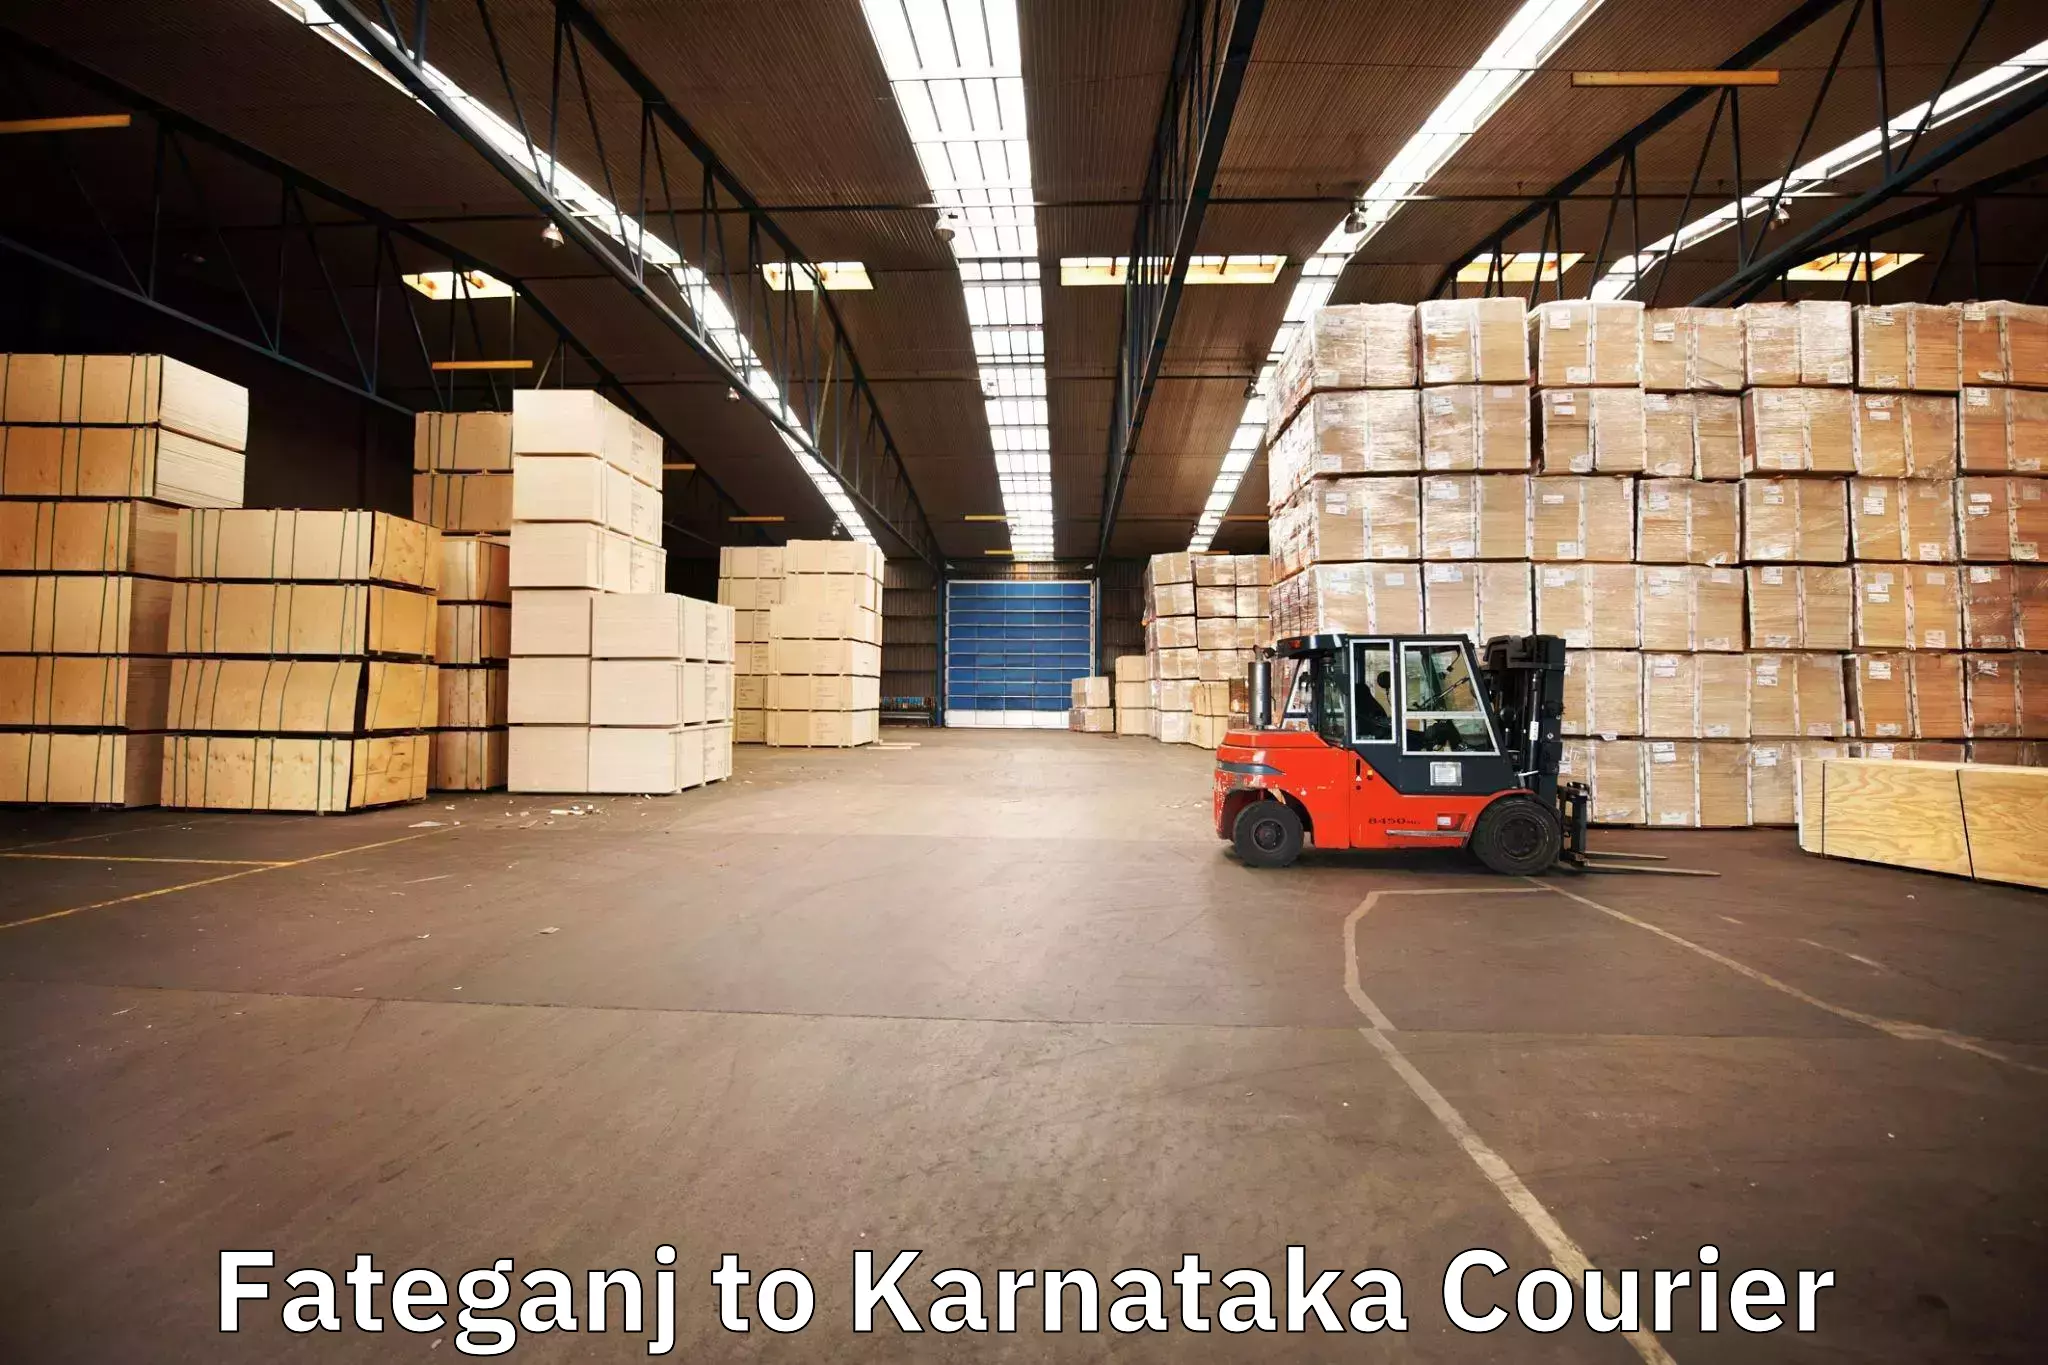 Efficient moving company Fateganj to Karnataka